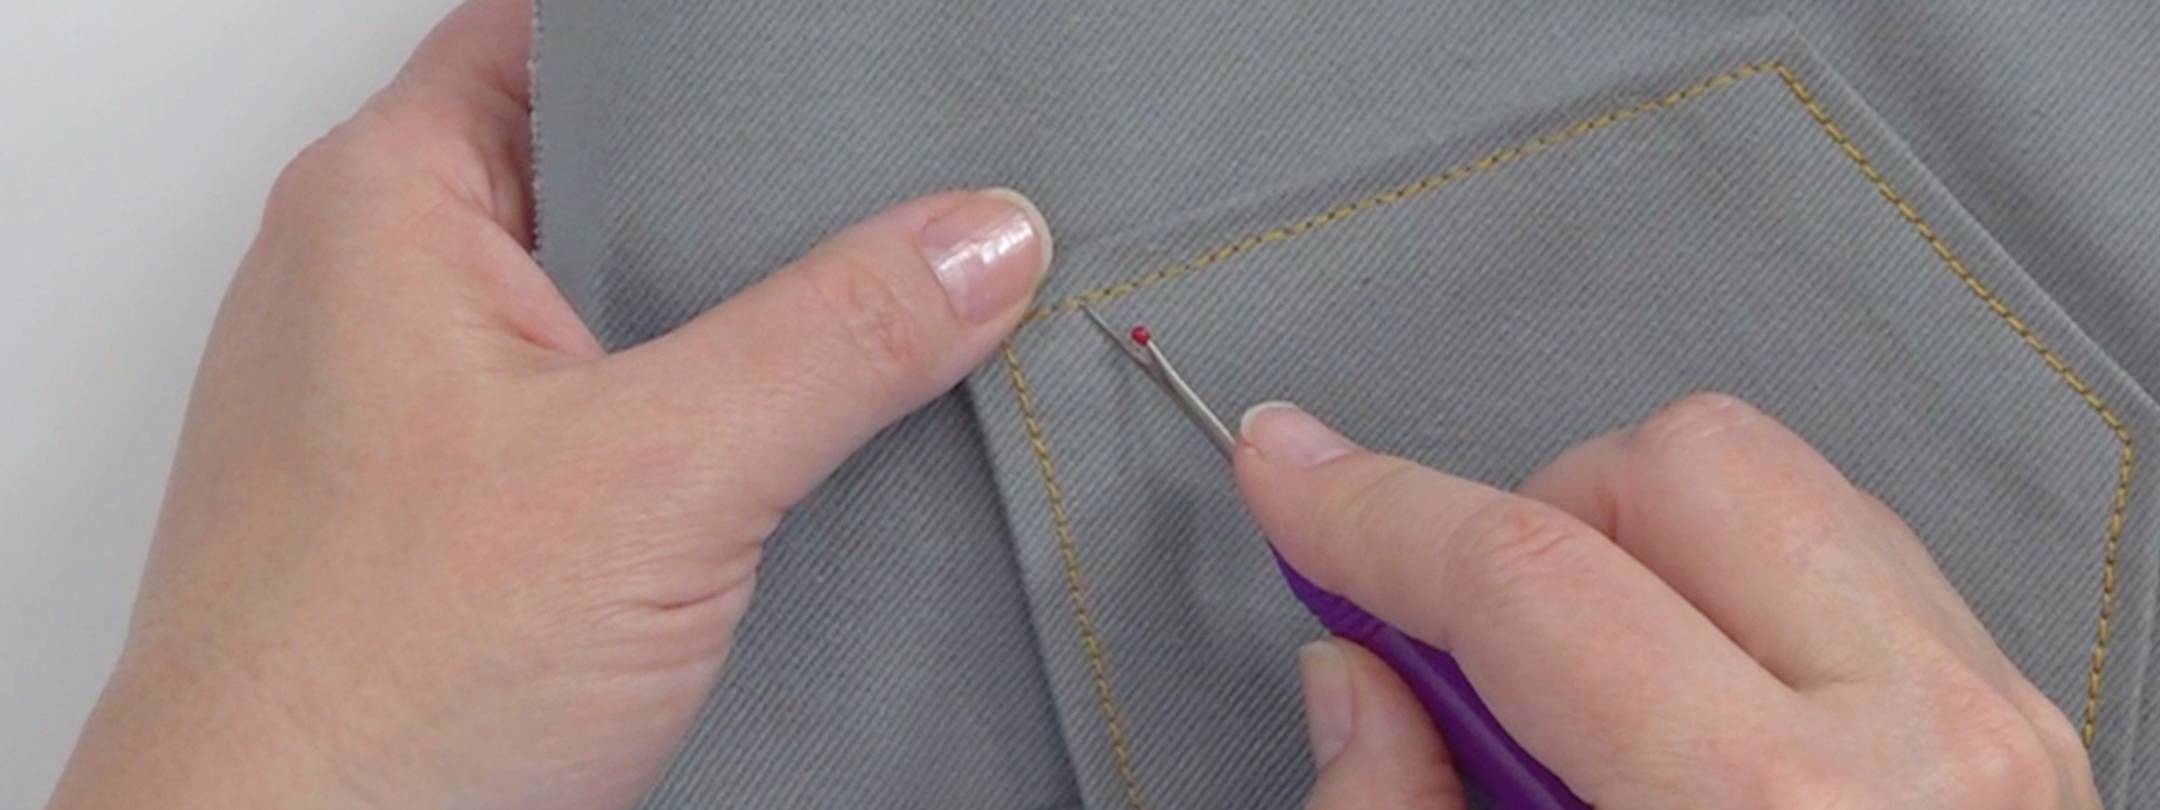 Stitch Ripper Embroidery Repair Tool